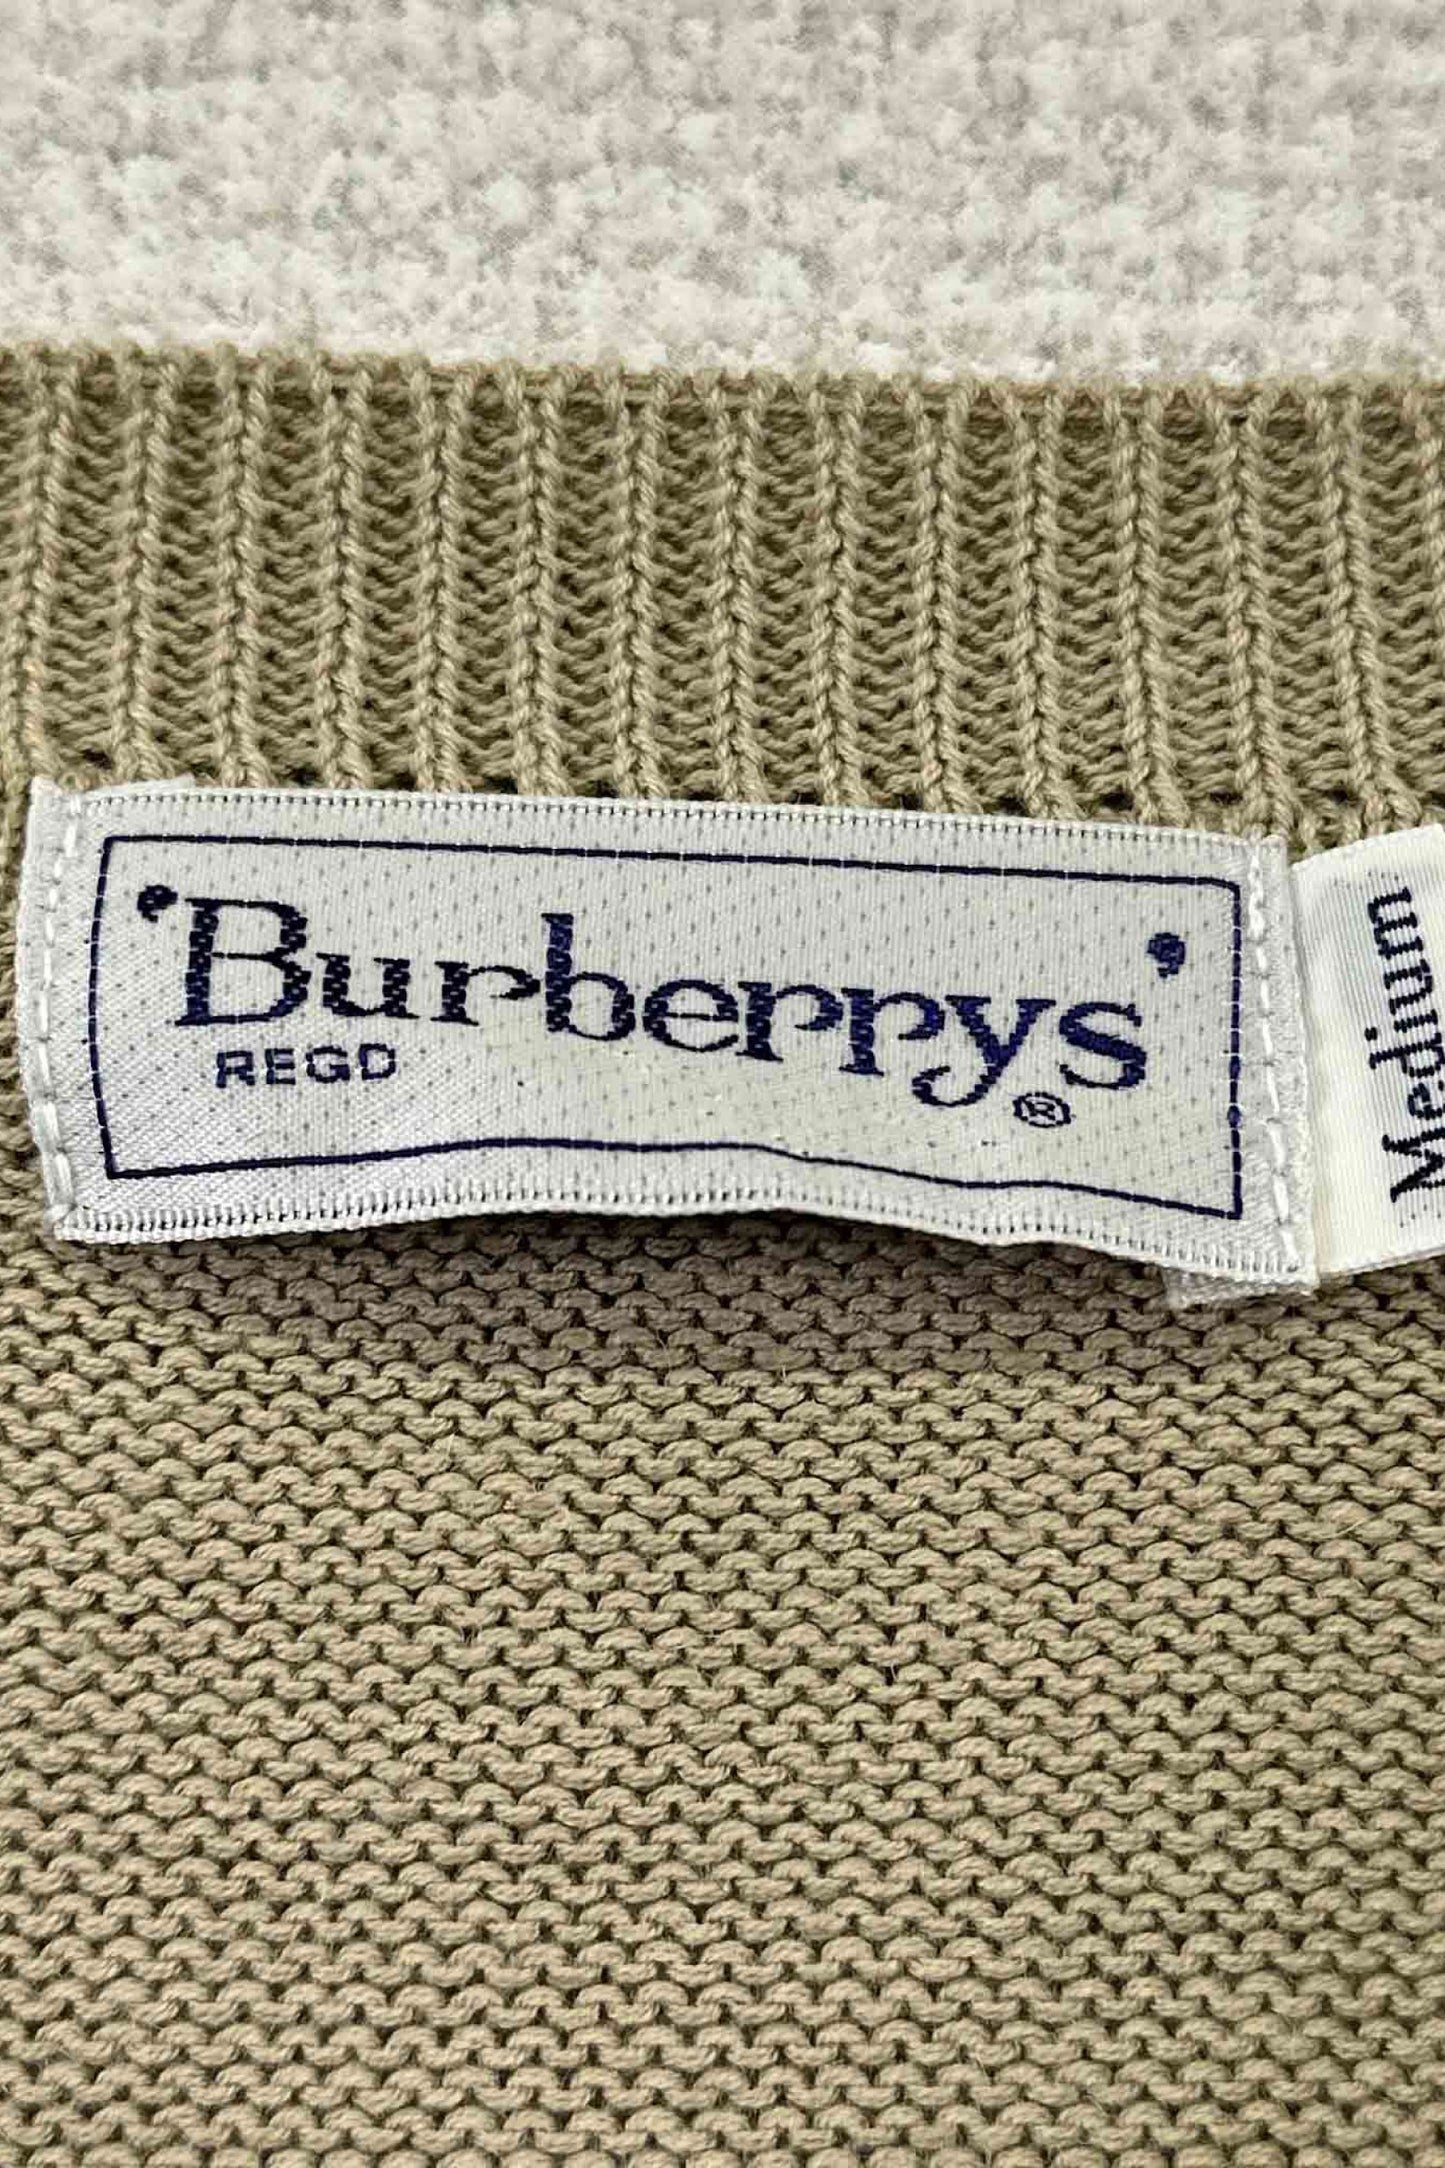 90's Burberrys argyle sweater